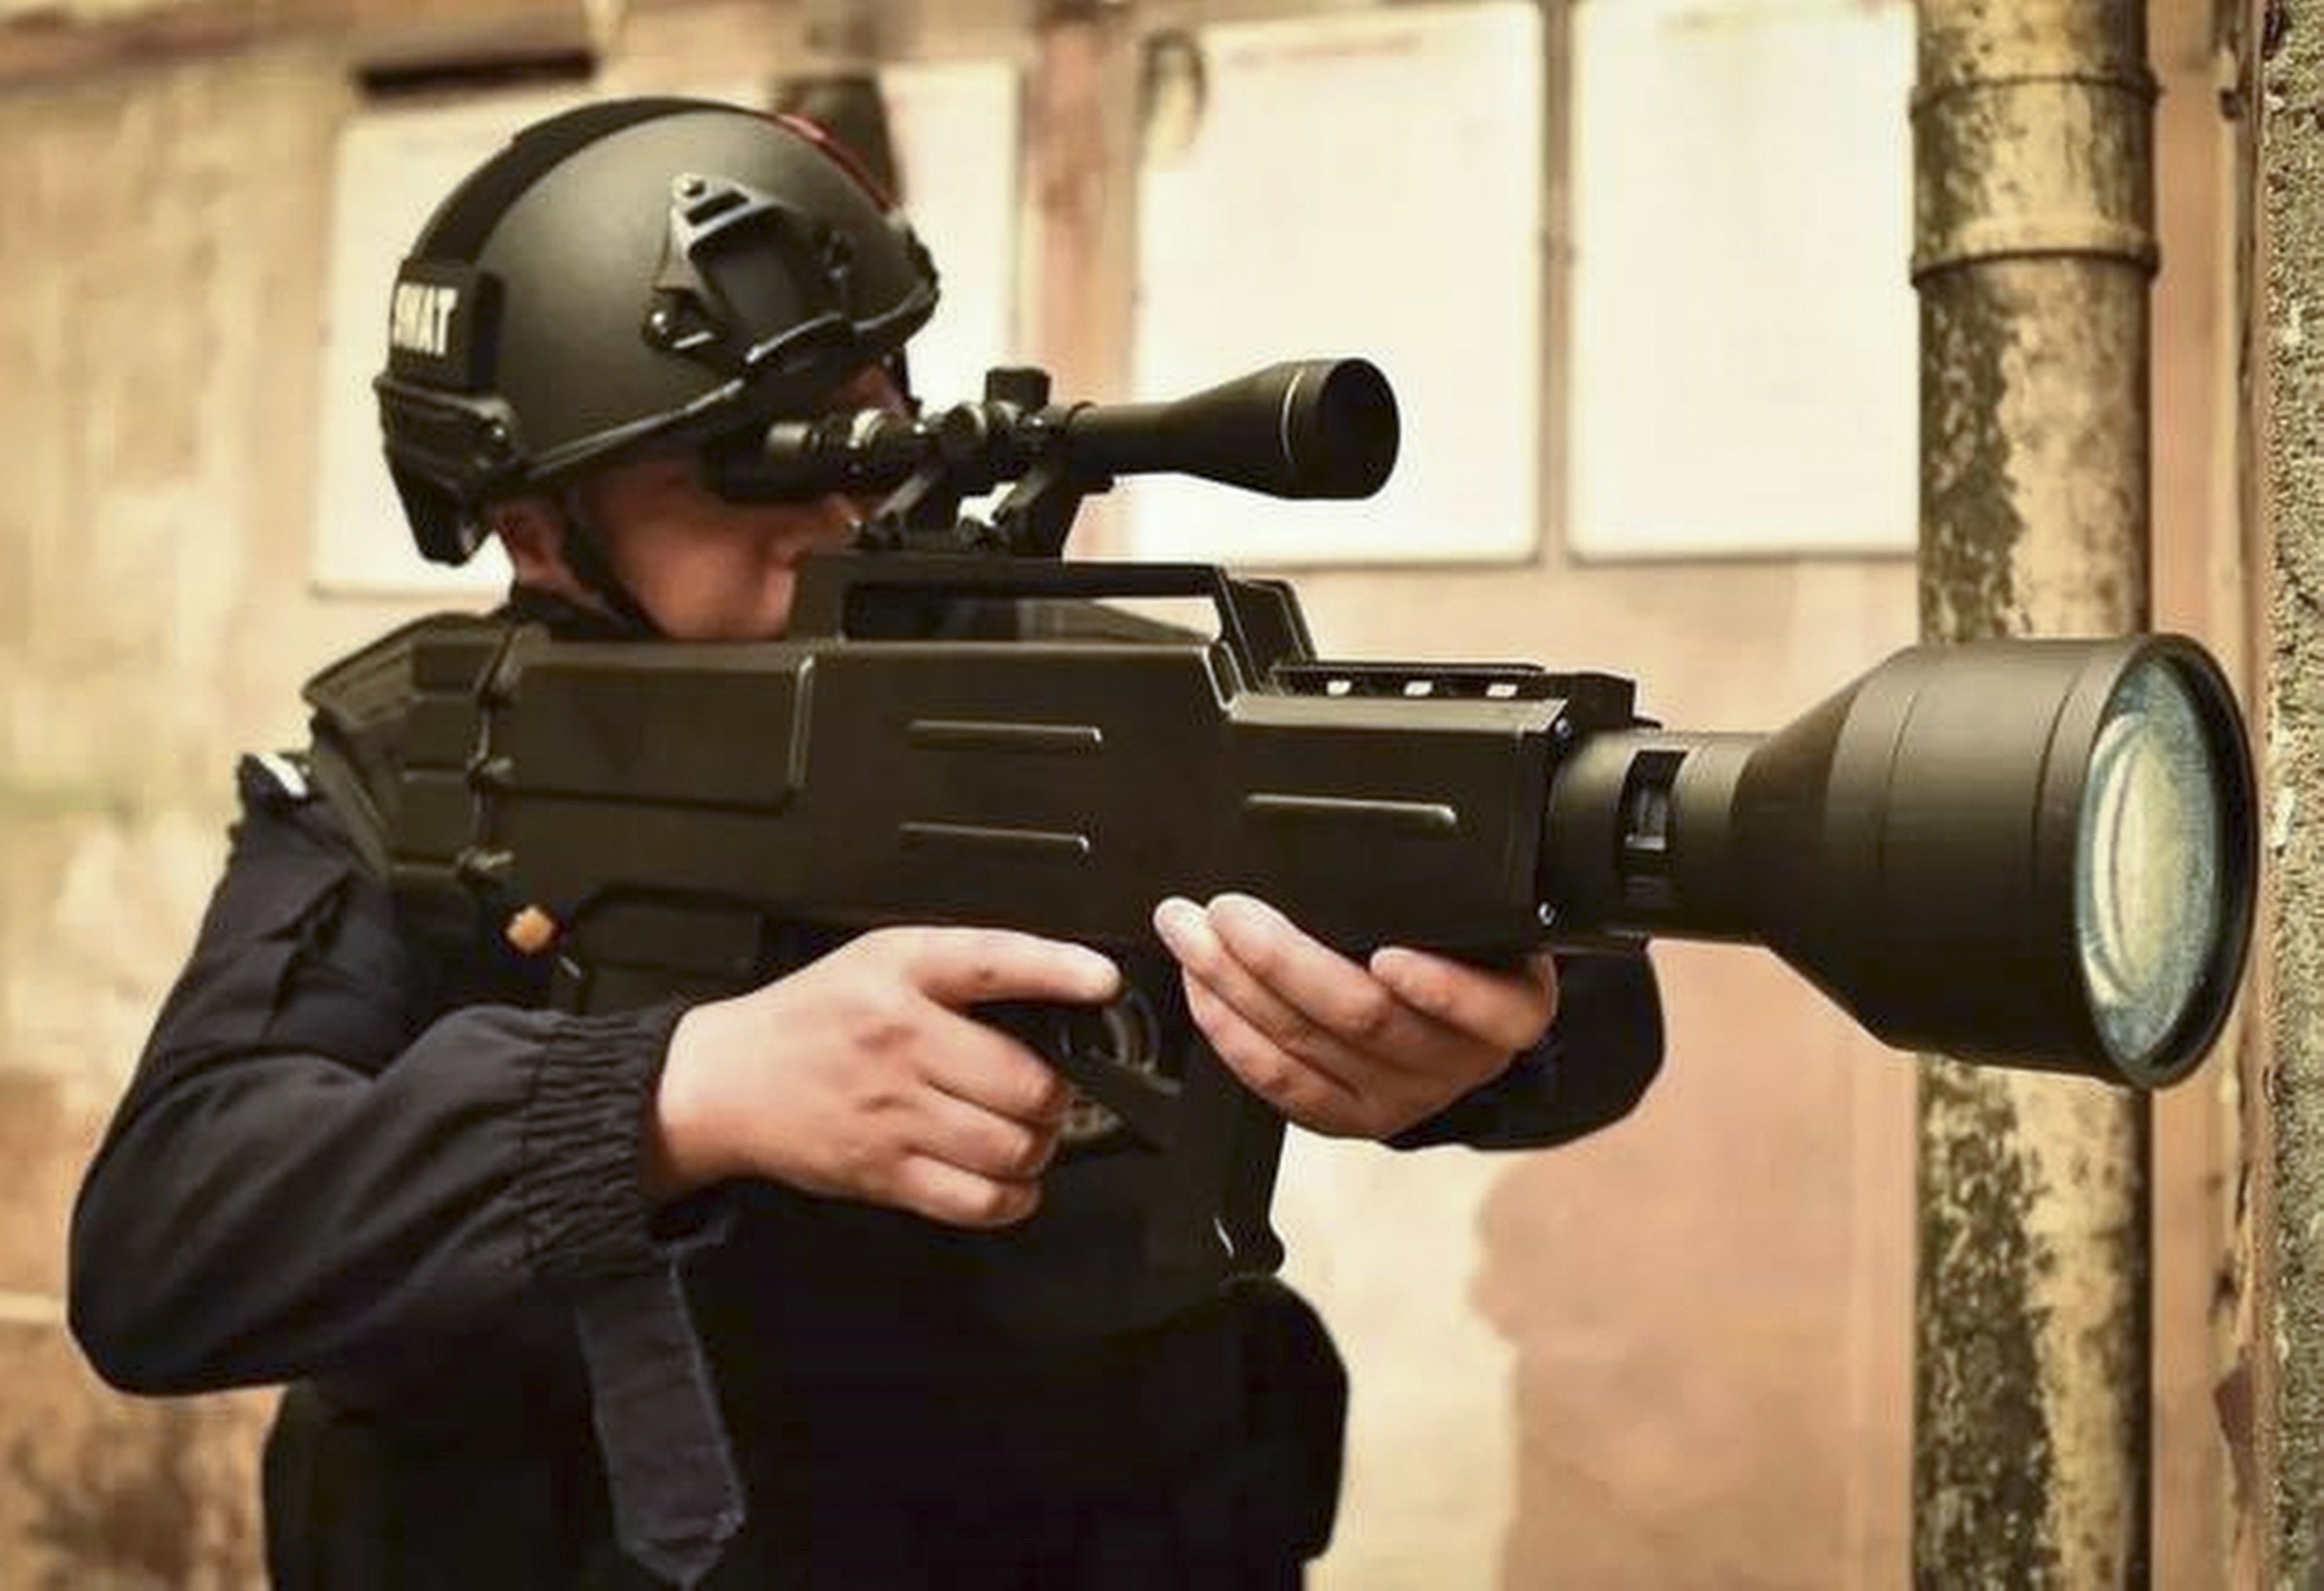 Laser AK 47 .scmp.com